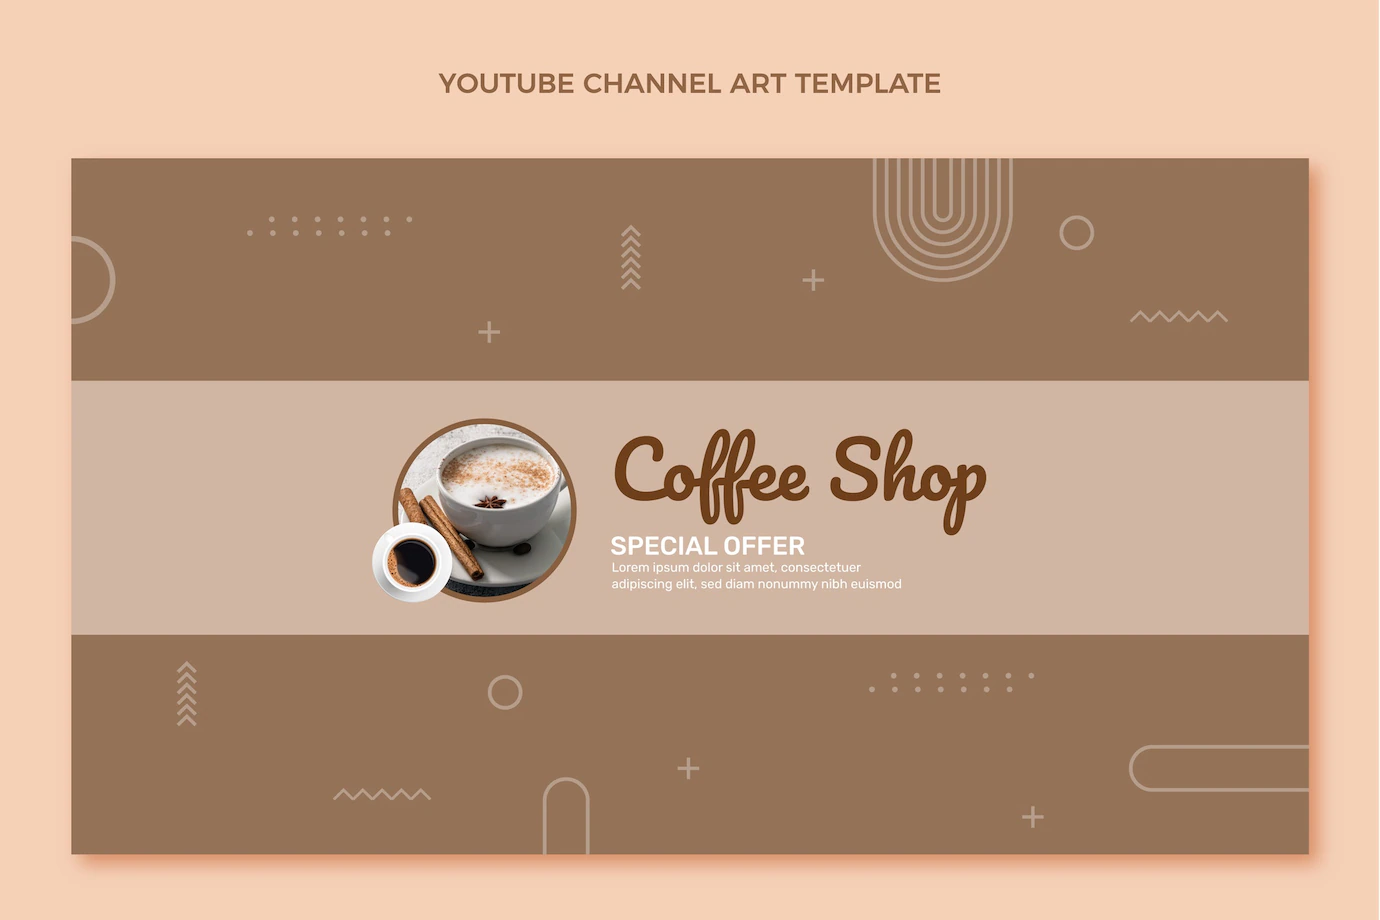 Realistic Coffee Shop Youtube Channel Art 23 2149228442